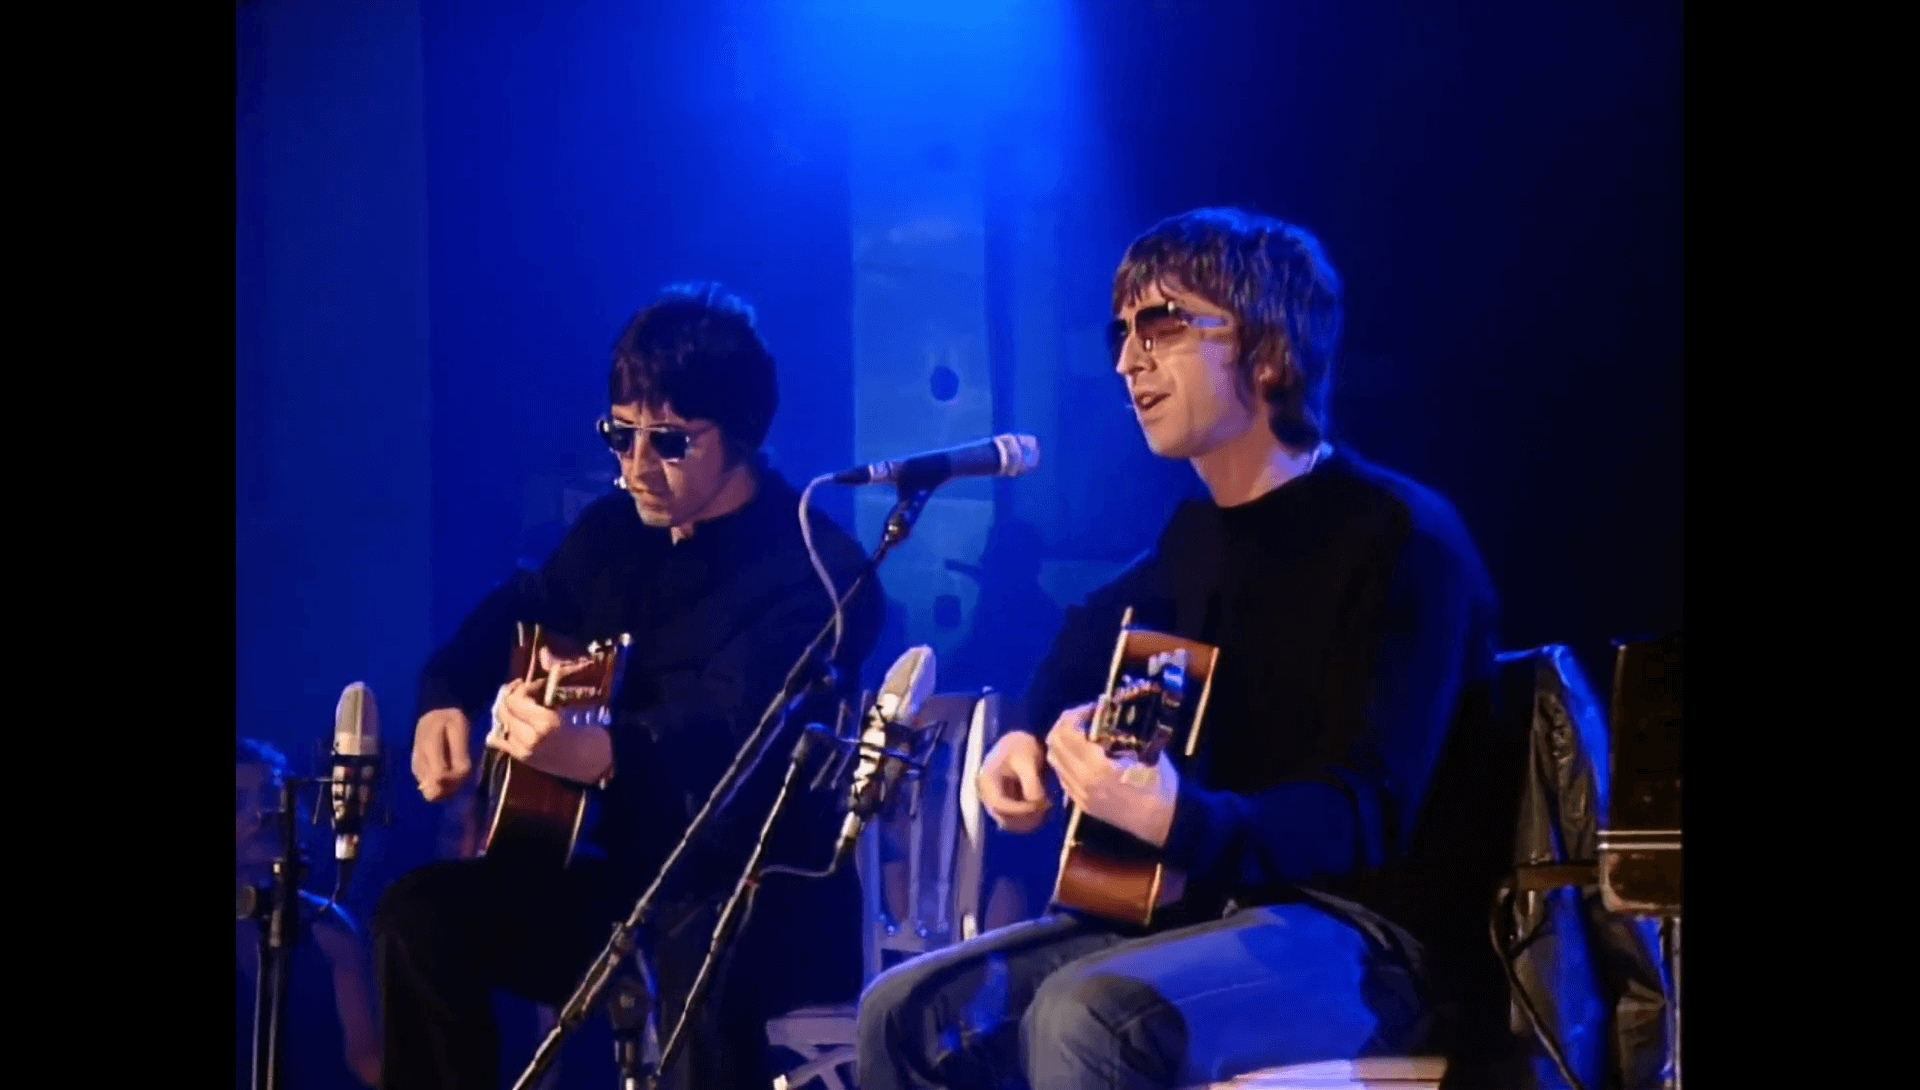 Oasis at Elstree Studios - May 22, 2000